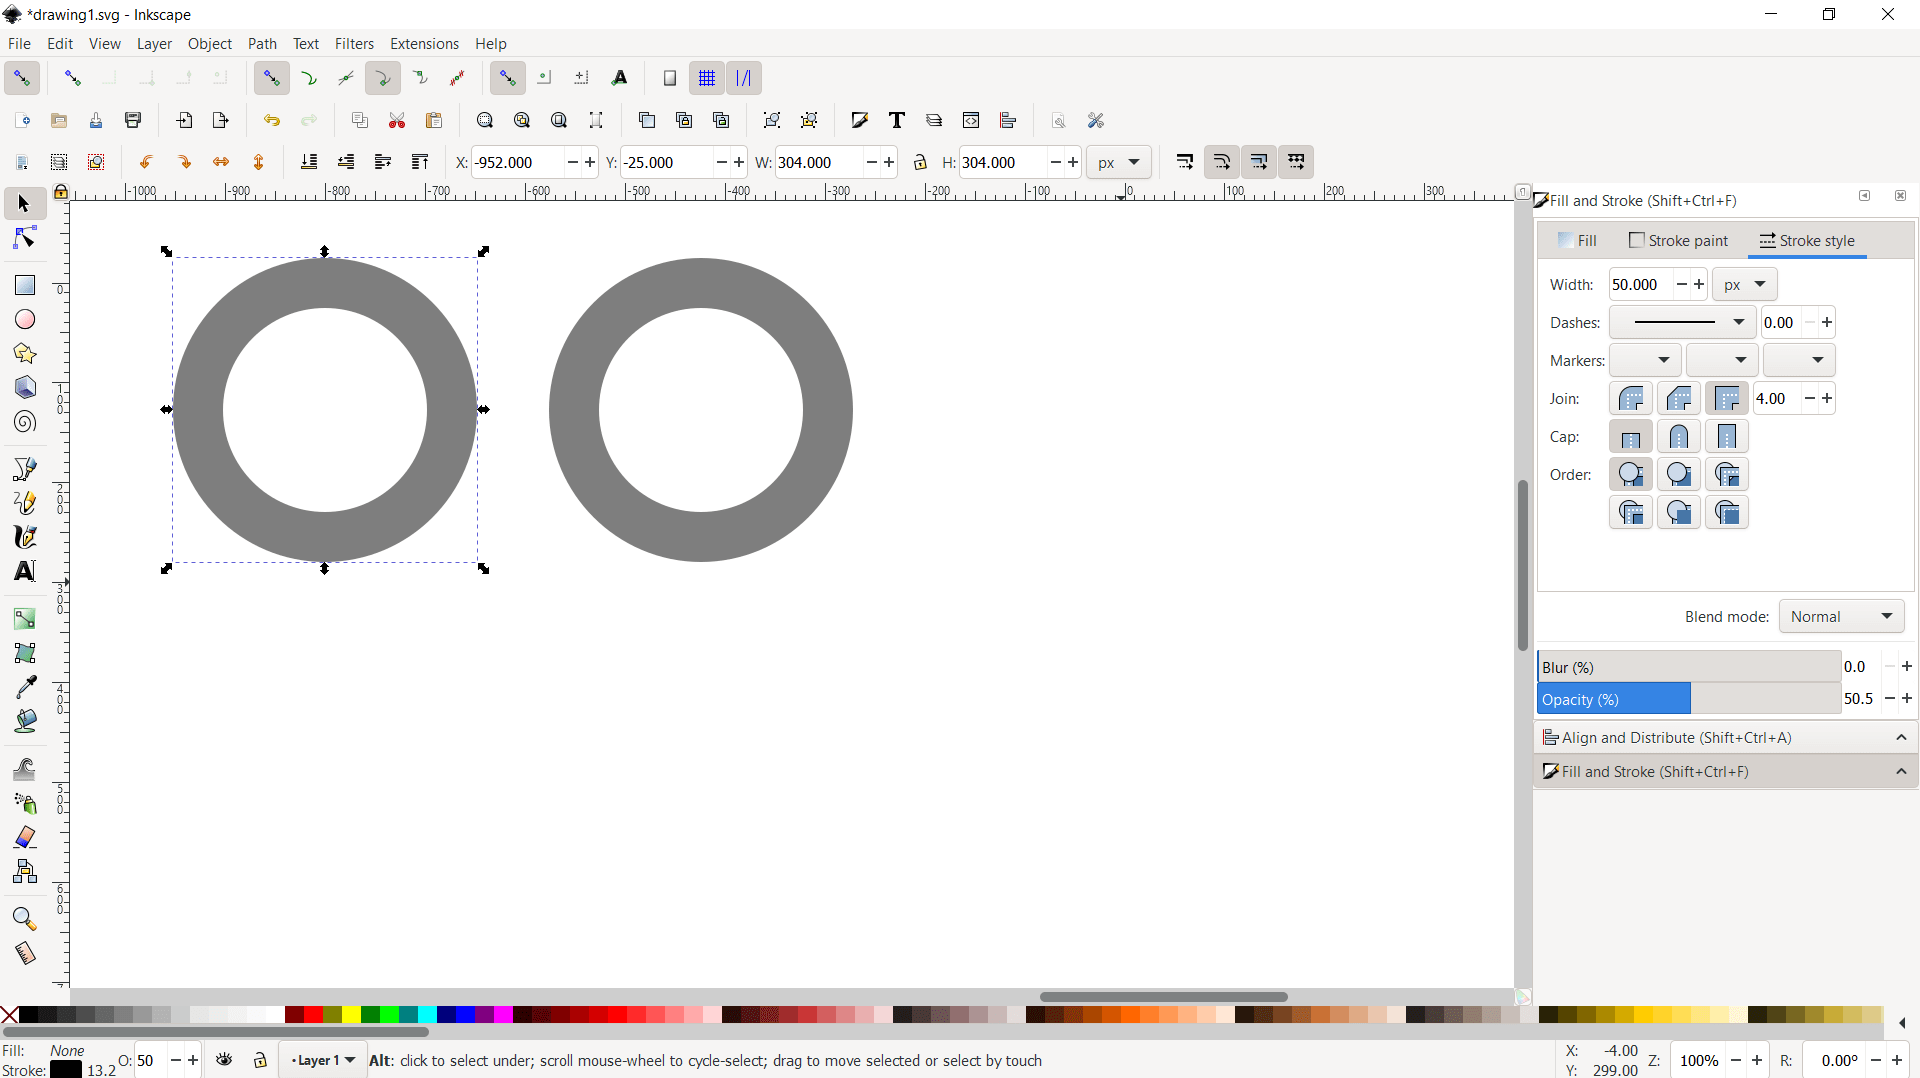 inkscape download for windows 7